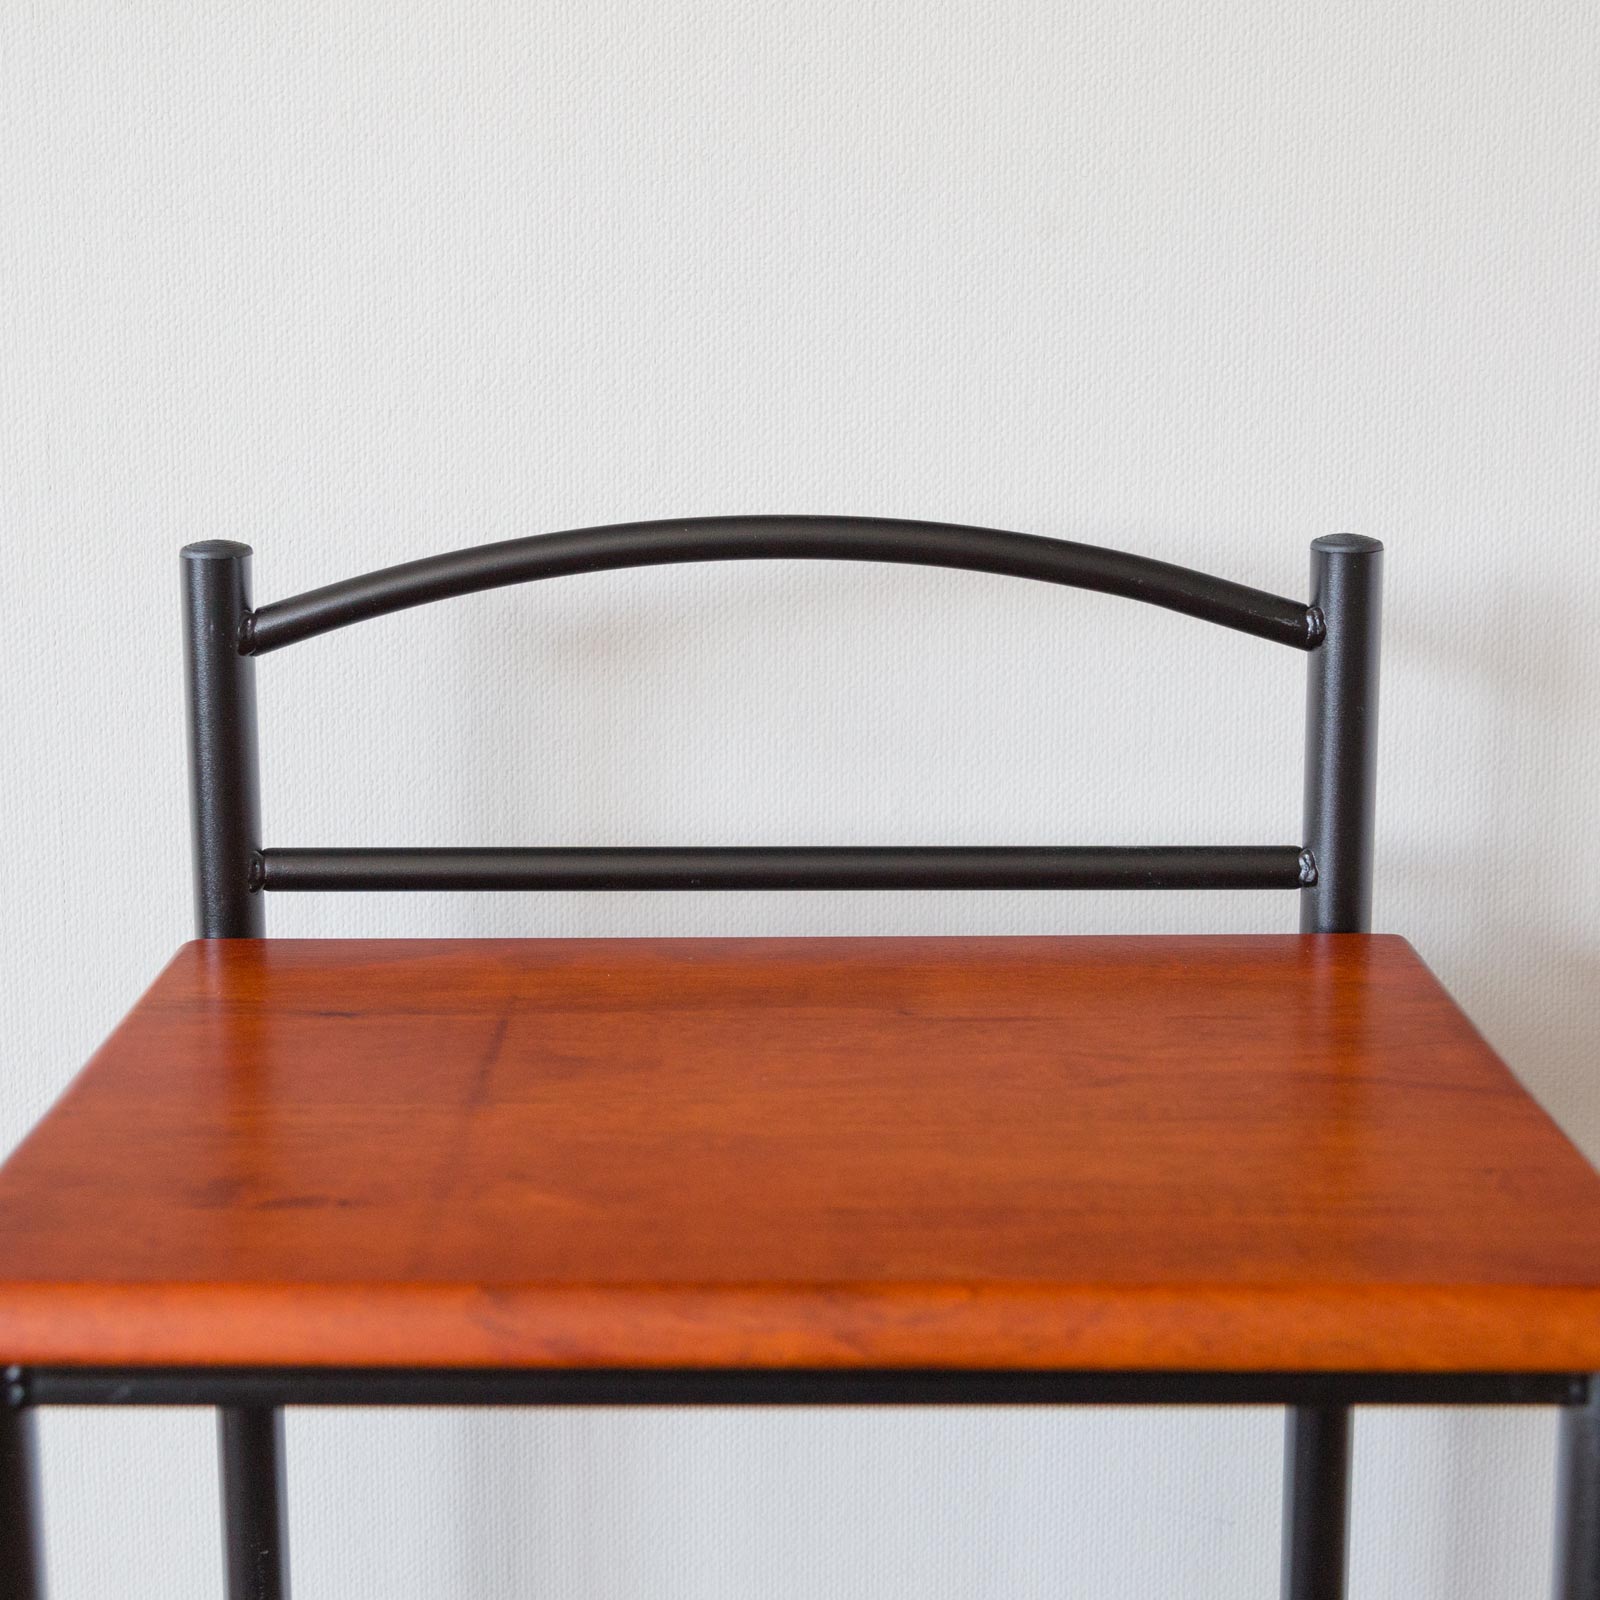 Nightstand Bedside Cabinet Metal Side Table